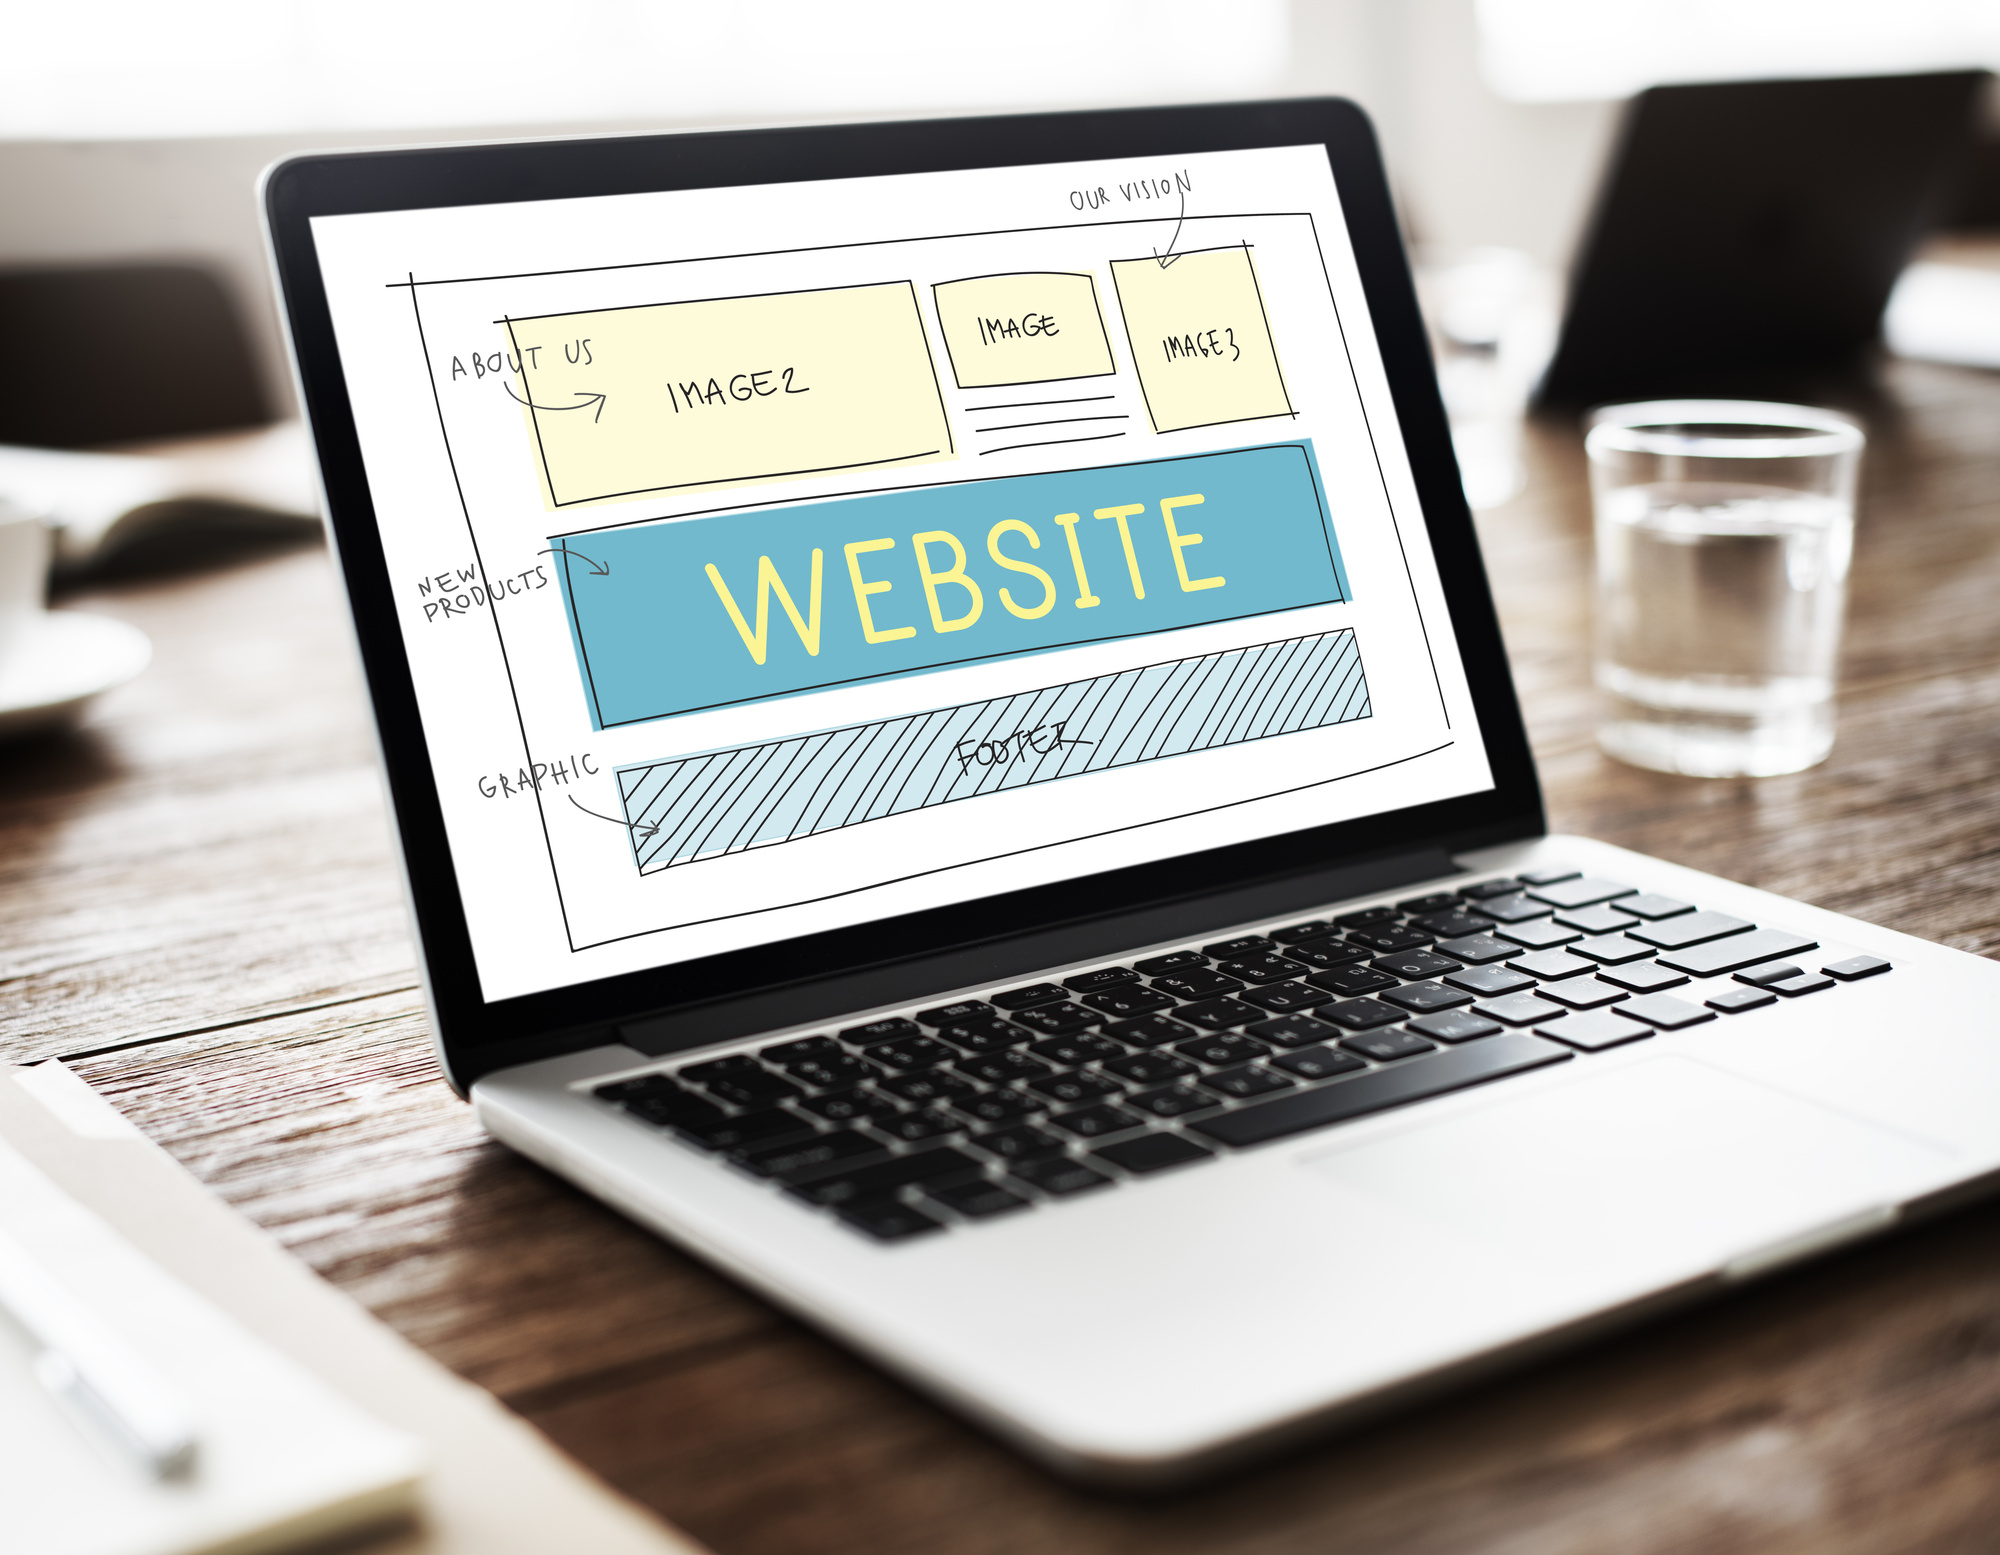 8 Homepage Design Tips to Make Your Website Pop - OSO Web Studio